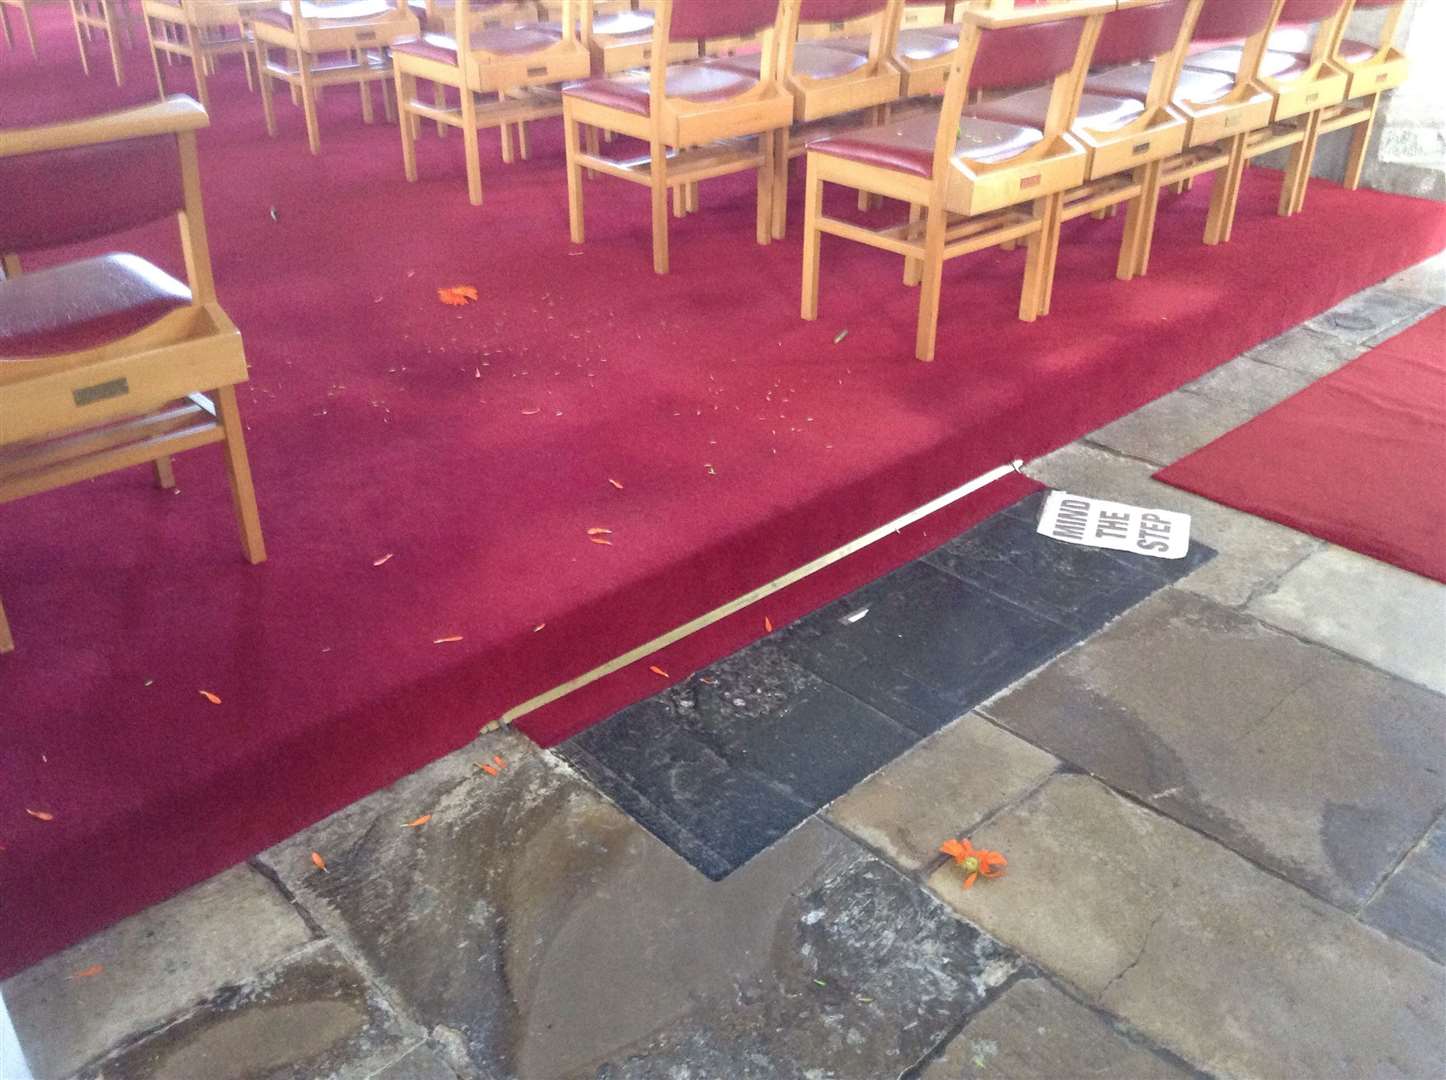 A flower arrangement in the church was destroyed